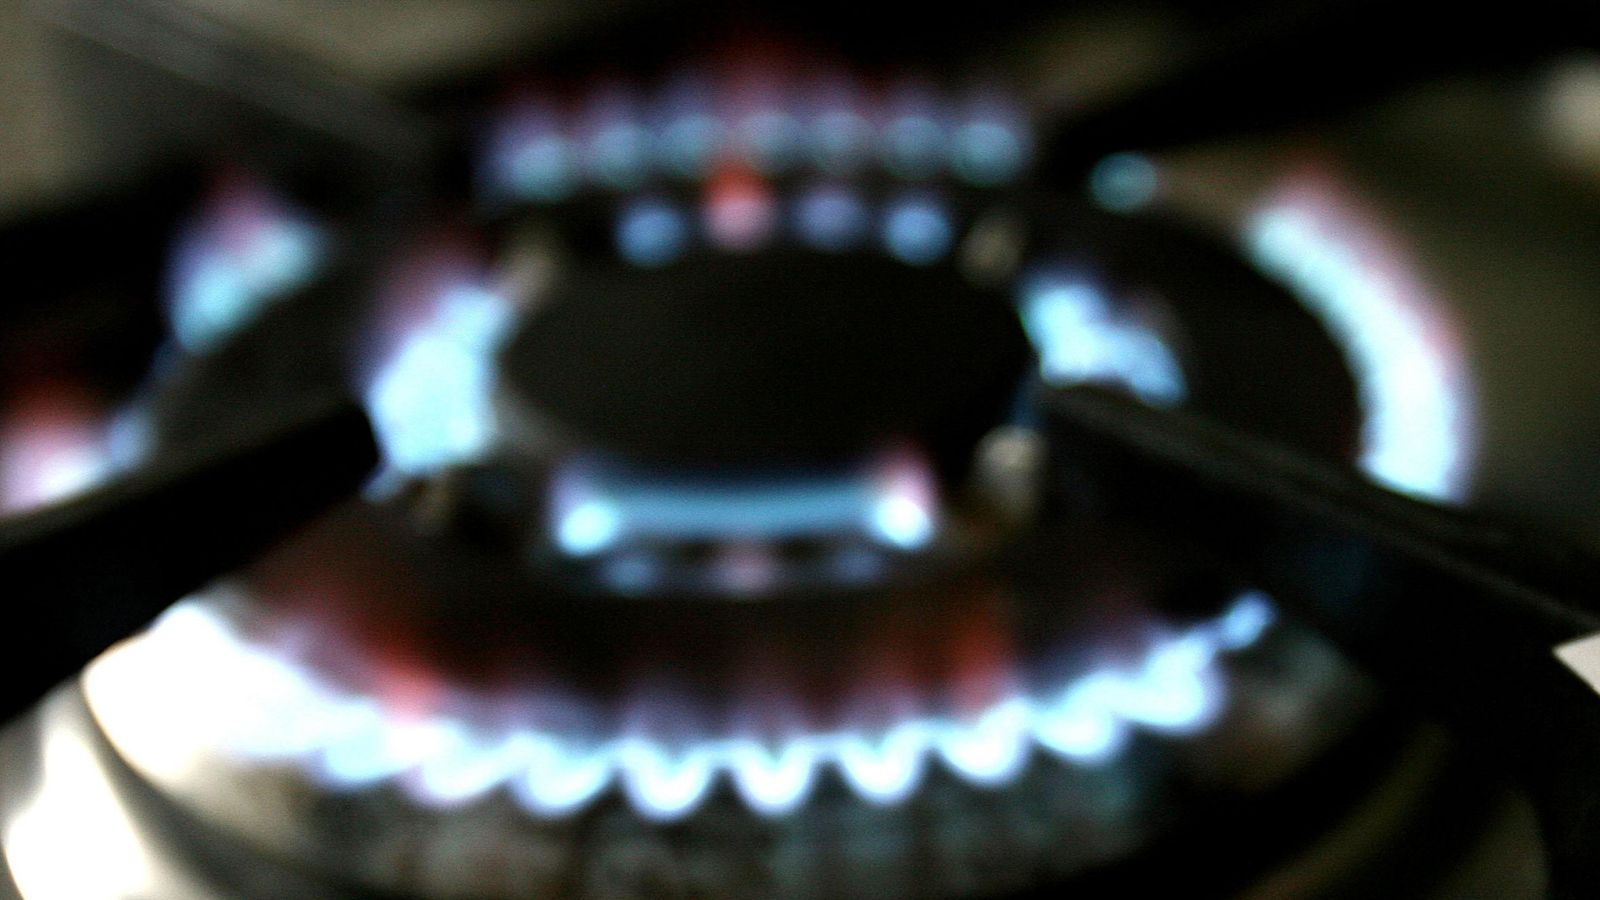 British Gas staff feel pressured to force installation of prepayment energy meters on customers in debt, says whistleblower